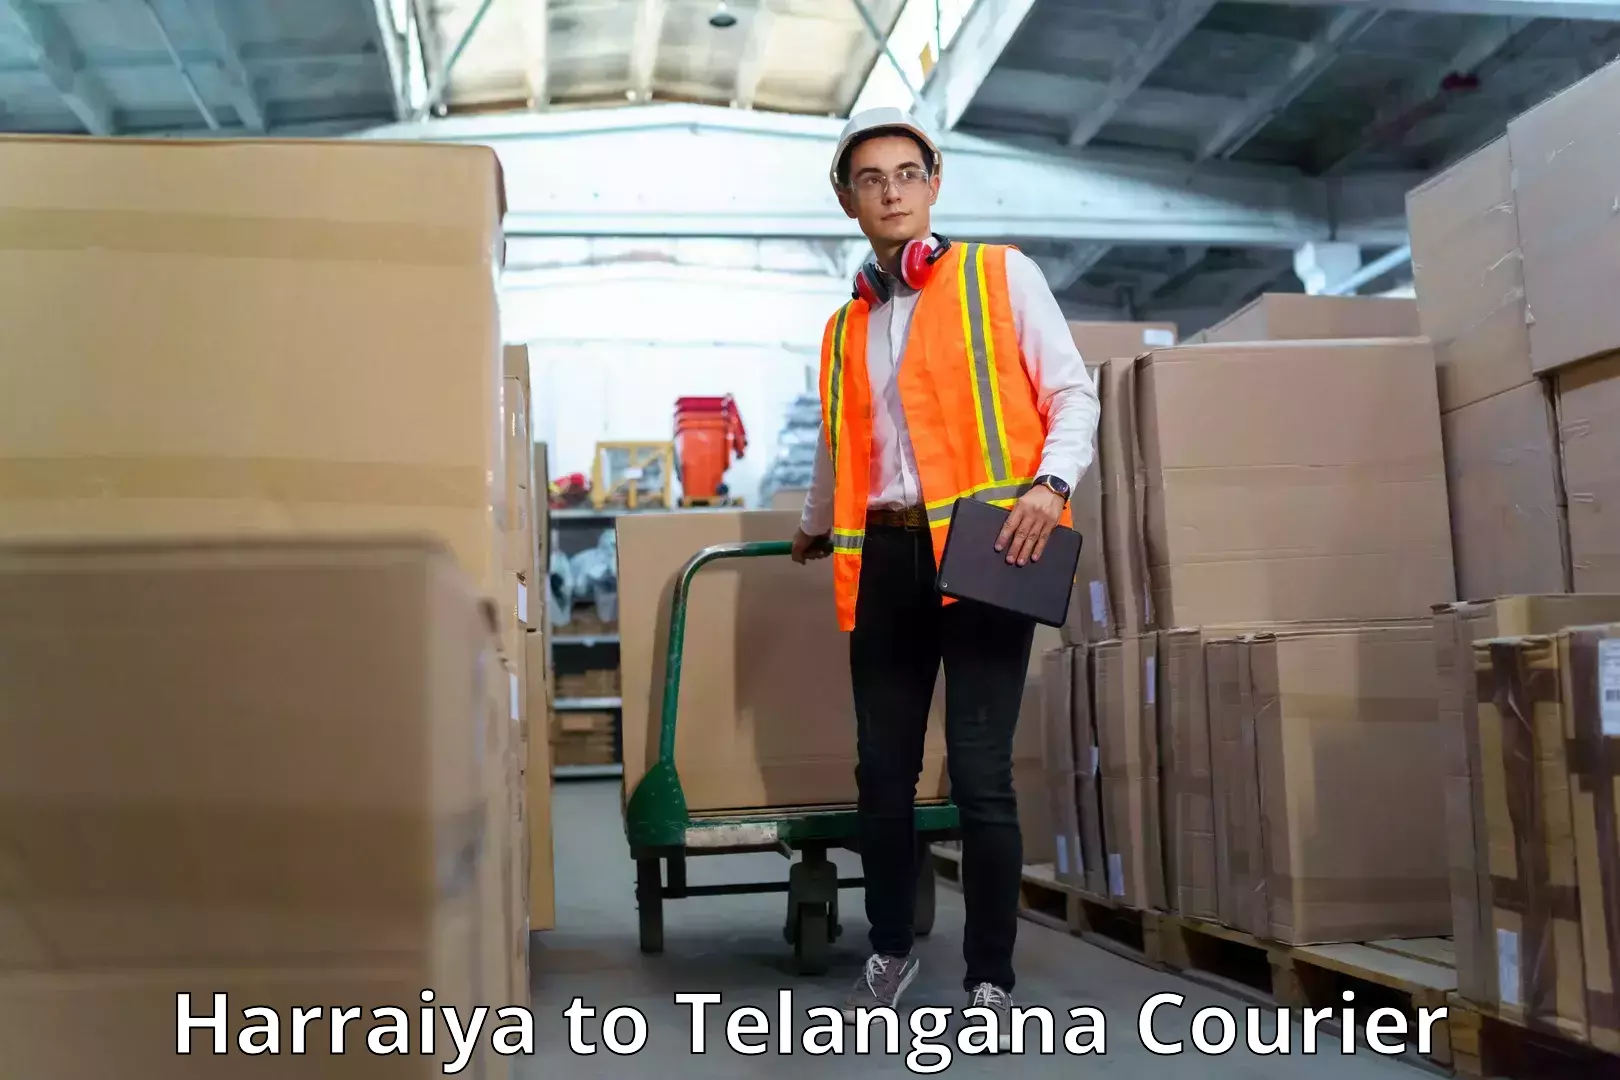 Courier service comparison Harraiya to Hyderabad